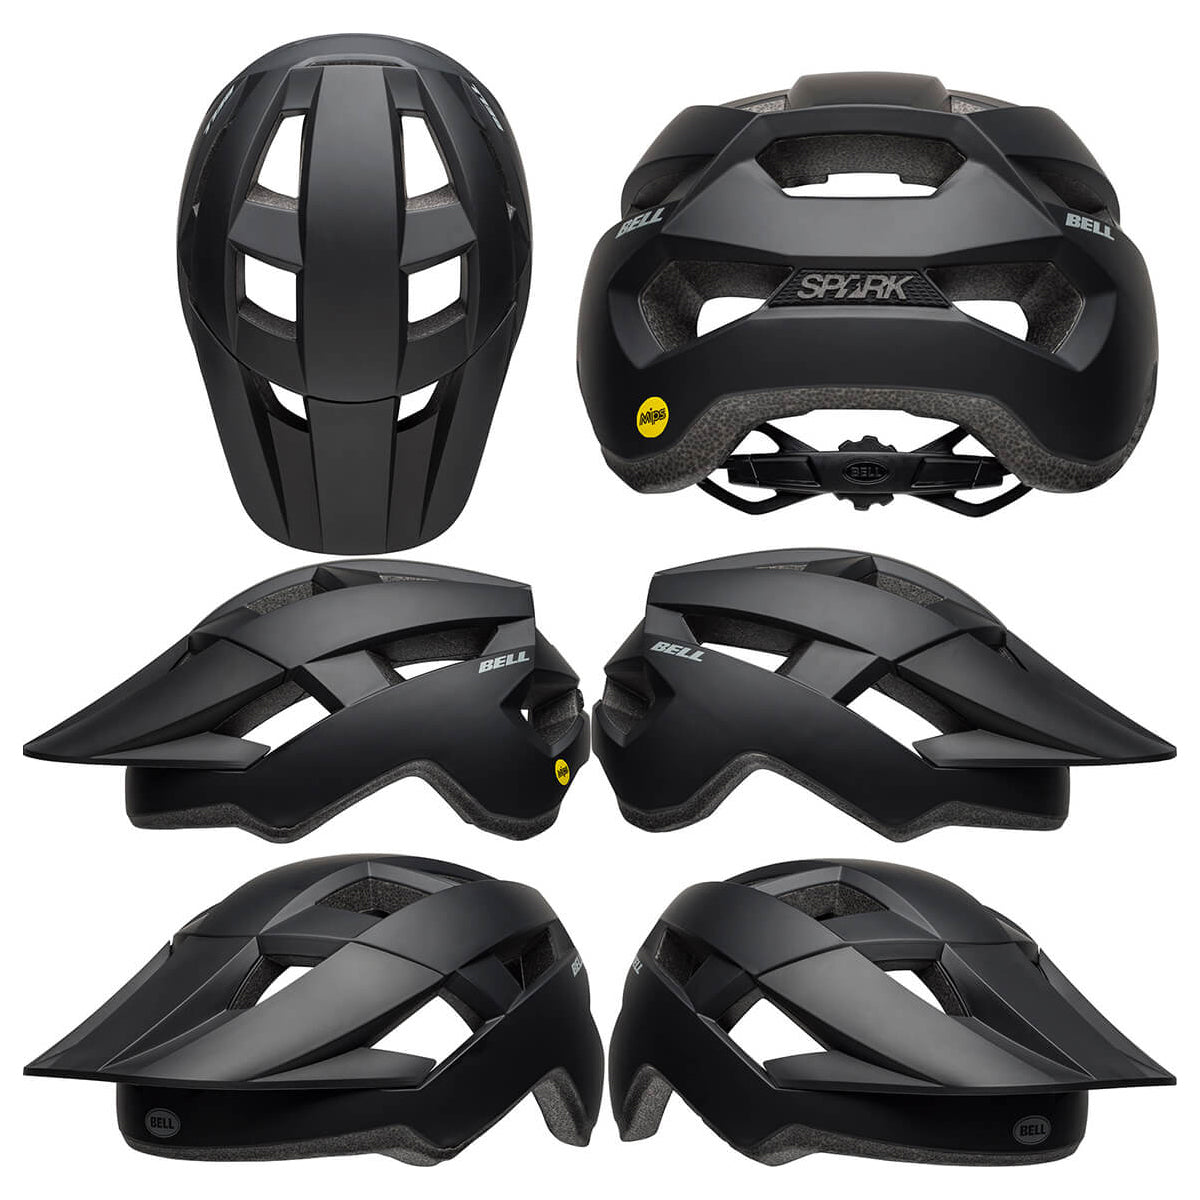 Bell Spark MIPS Helmet - One Size Fits Most - Matte Black - AS-NZS 2063-2008 Standard